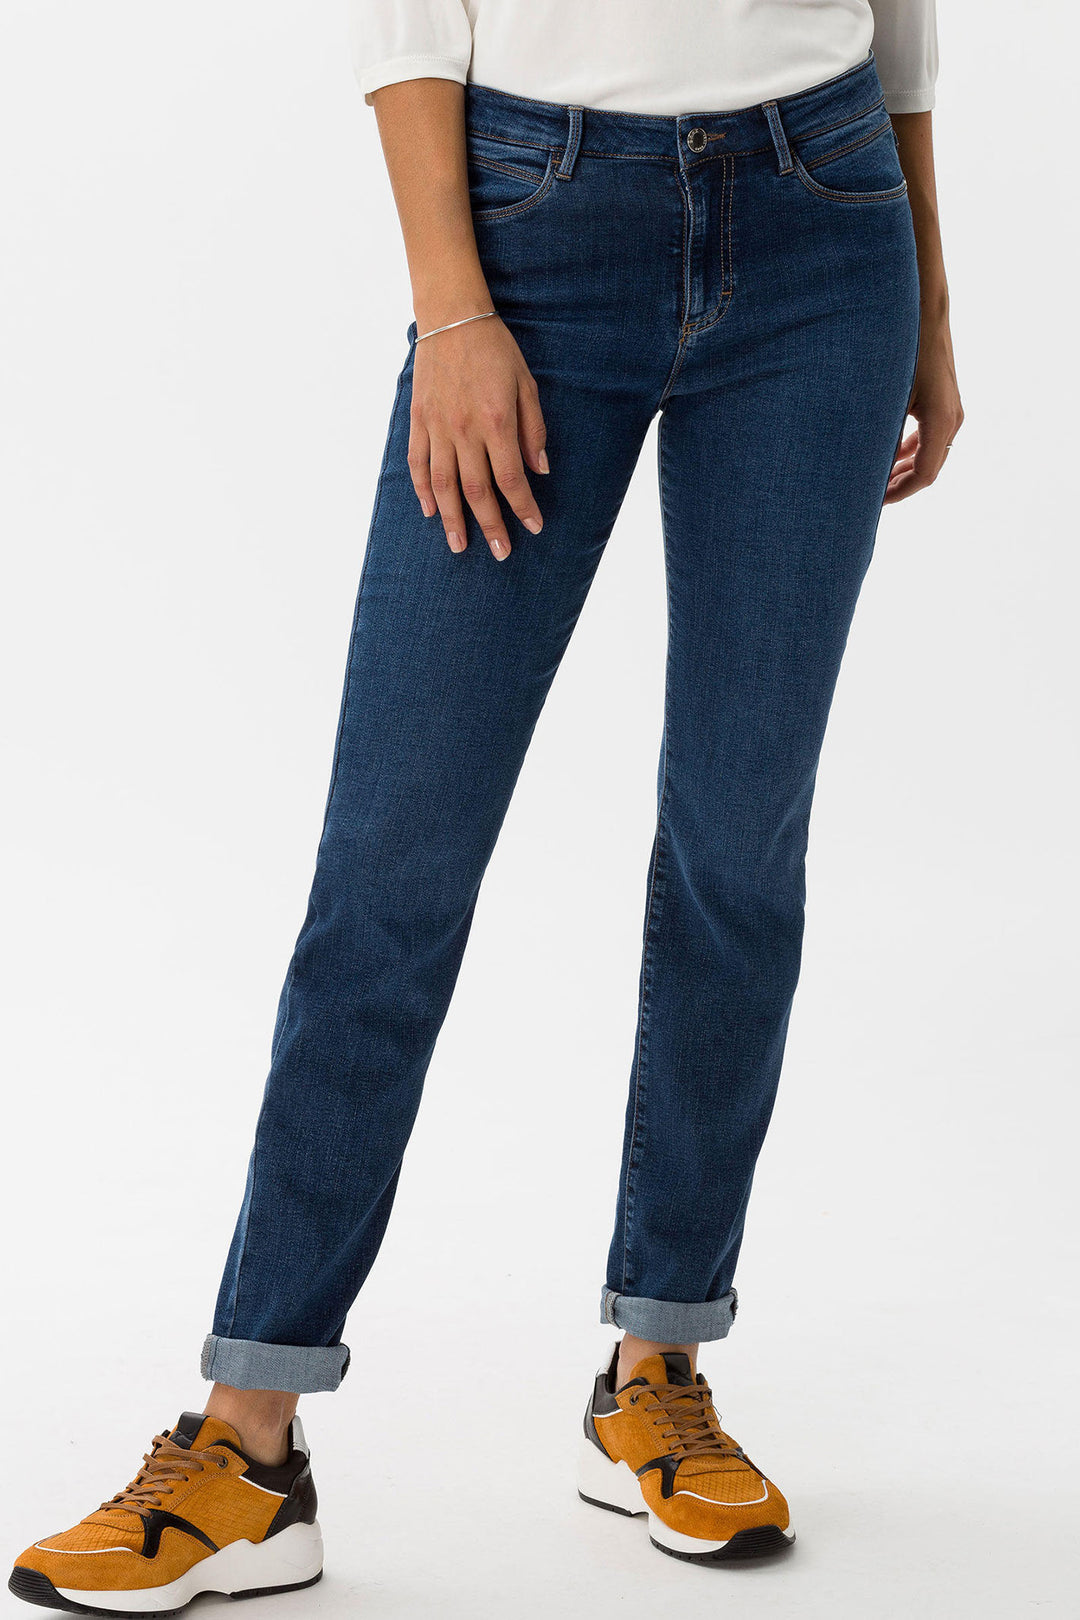 Brax Shakira 70-1000 25 Slightly Used Regular Blue Five Pocket Skinny Jeans - Dotique Chesterfield